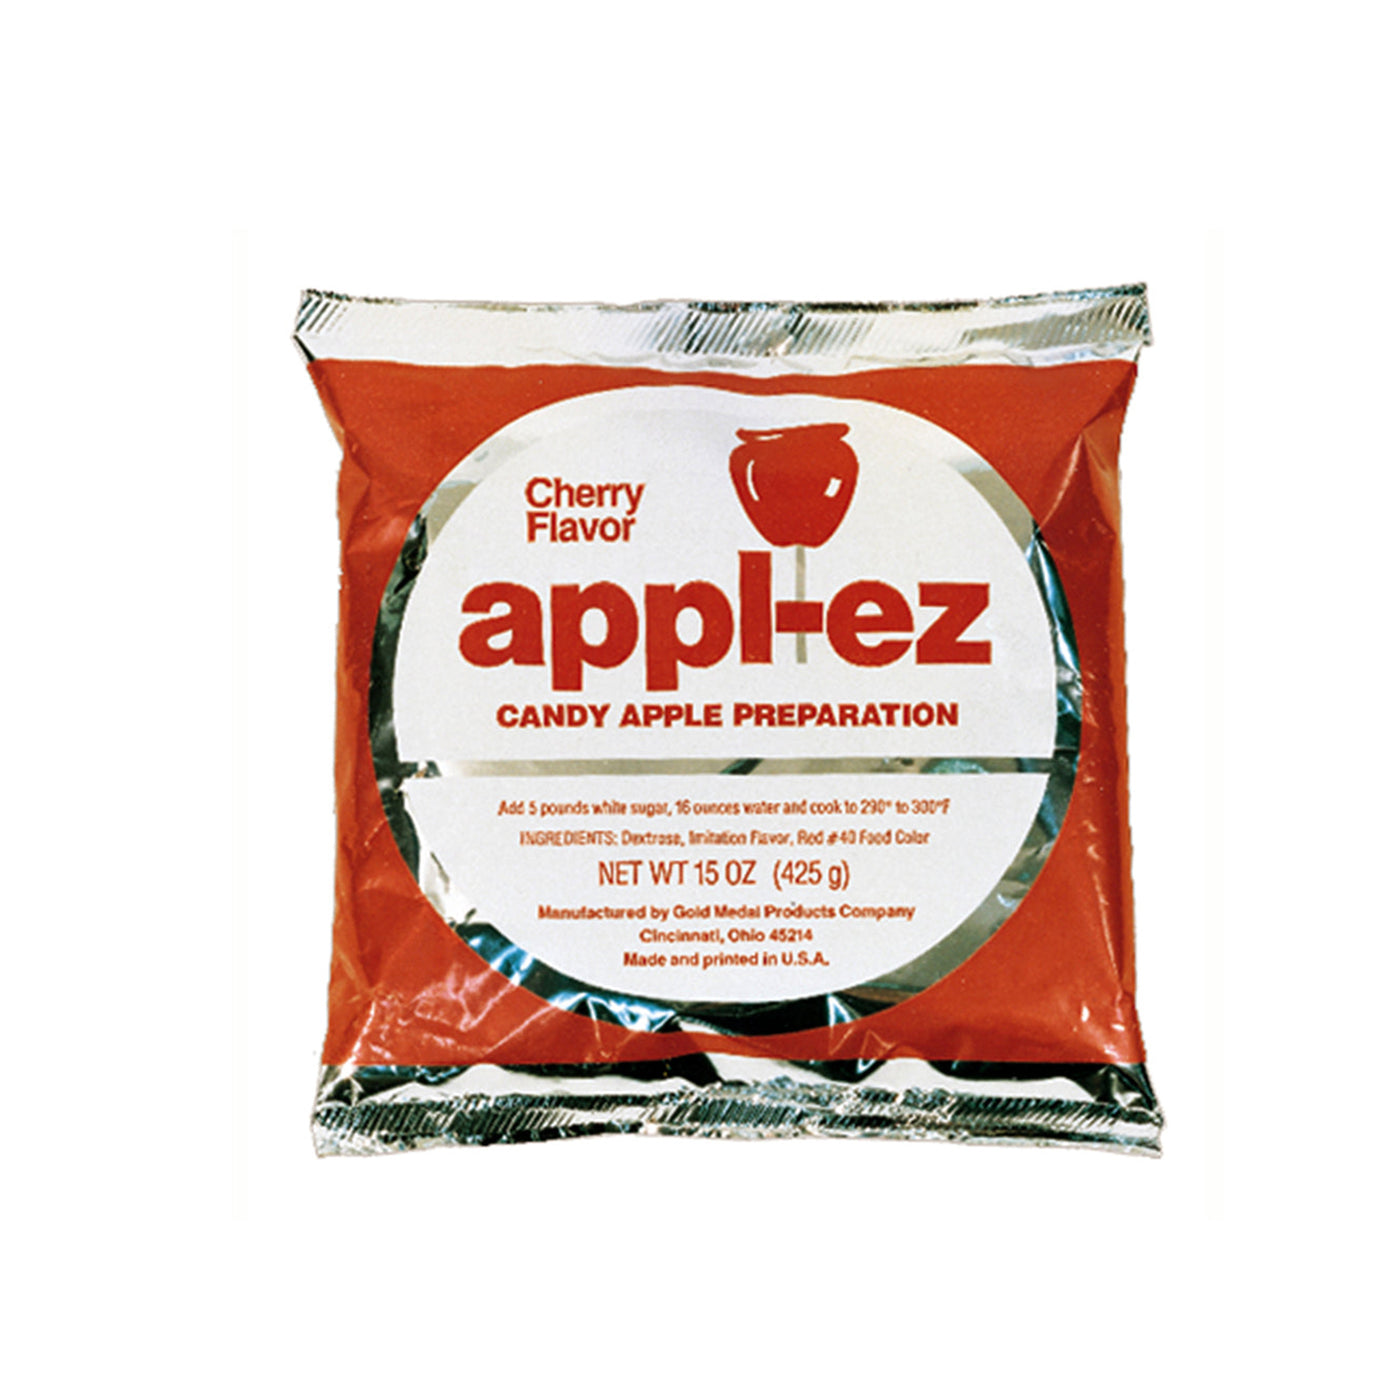 Caramel/Candy Apple Supplies  6.5 Super Setterstix - Gold Medal #4004 –  Gold Medal Products Co.